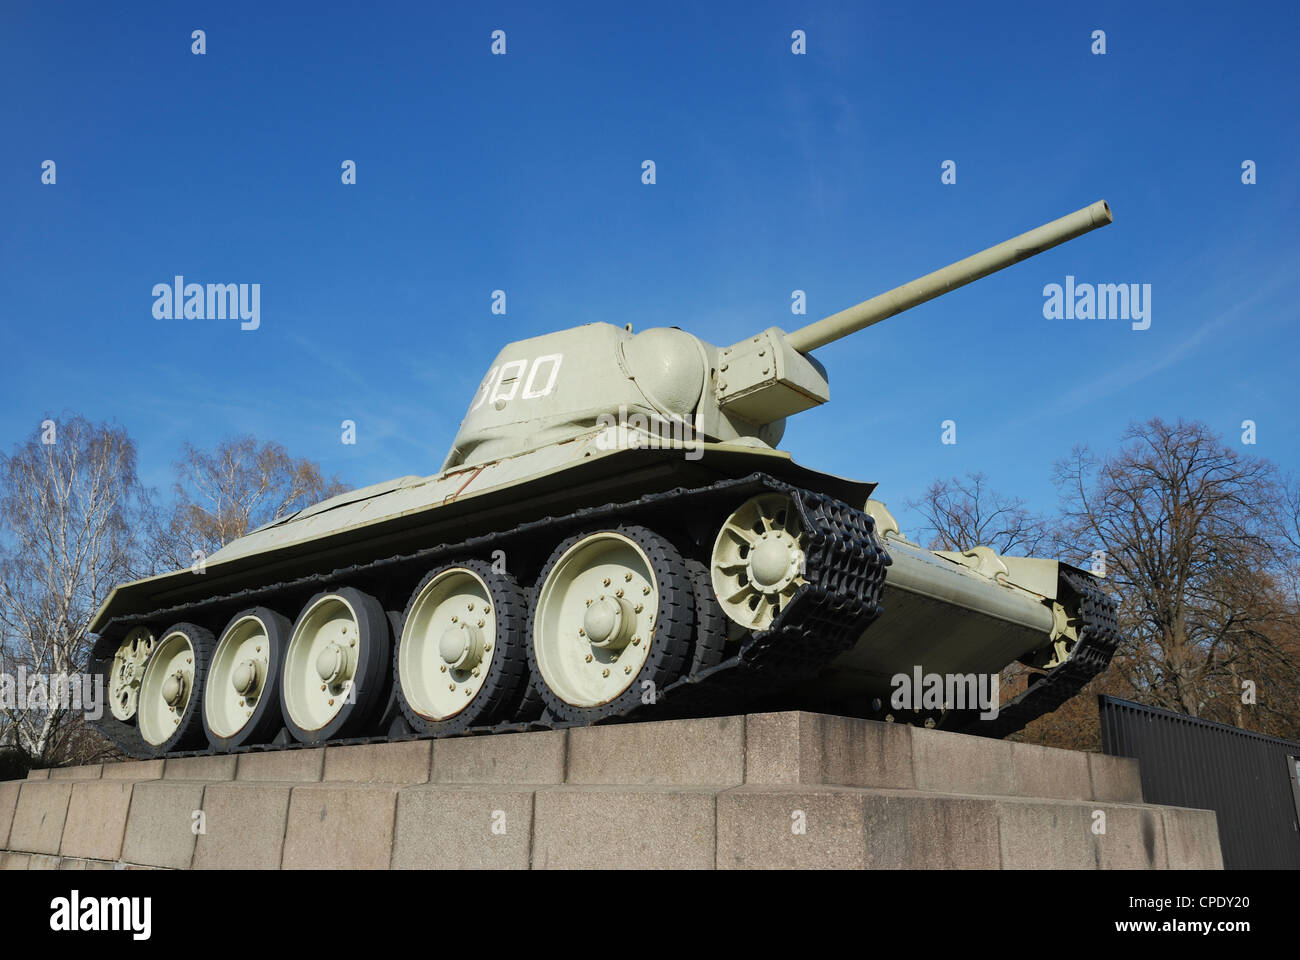 A T-34 tank at the Soviet War Memorial, Berlin, Germany. Stock Photo